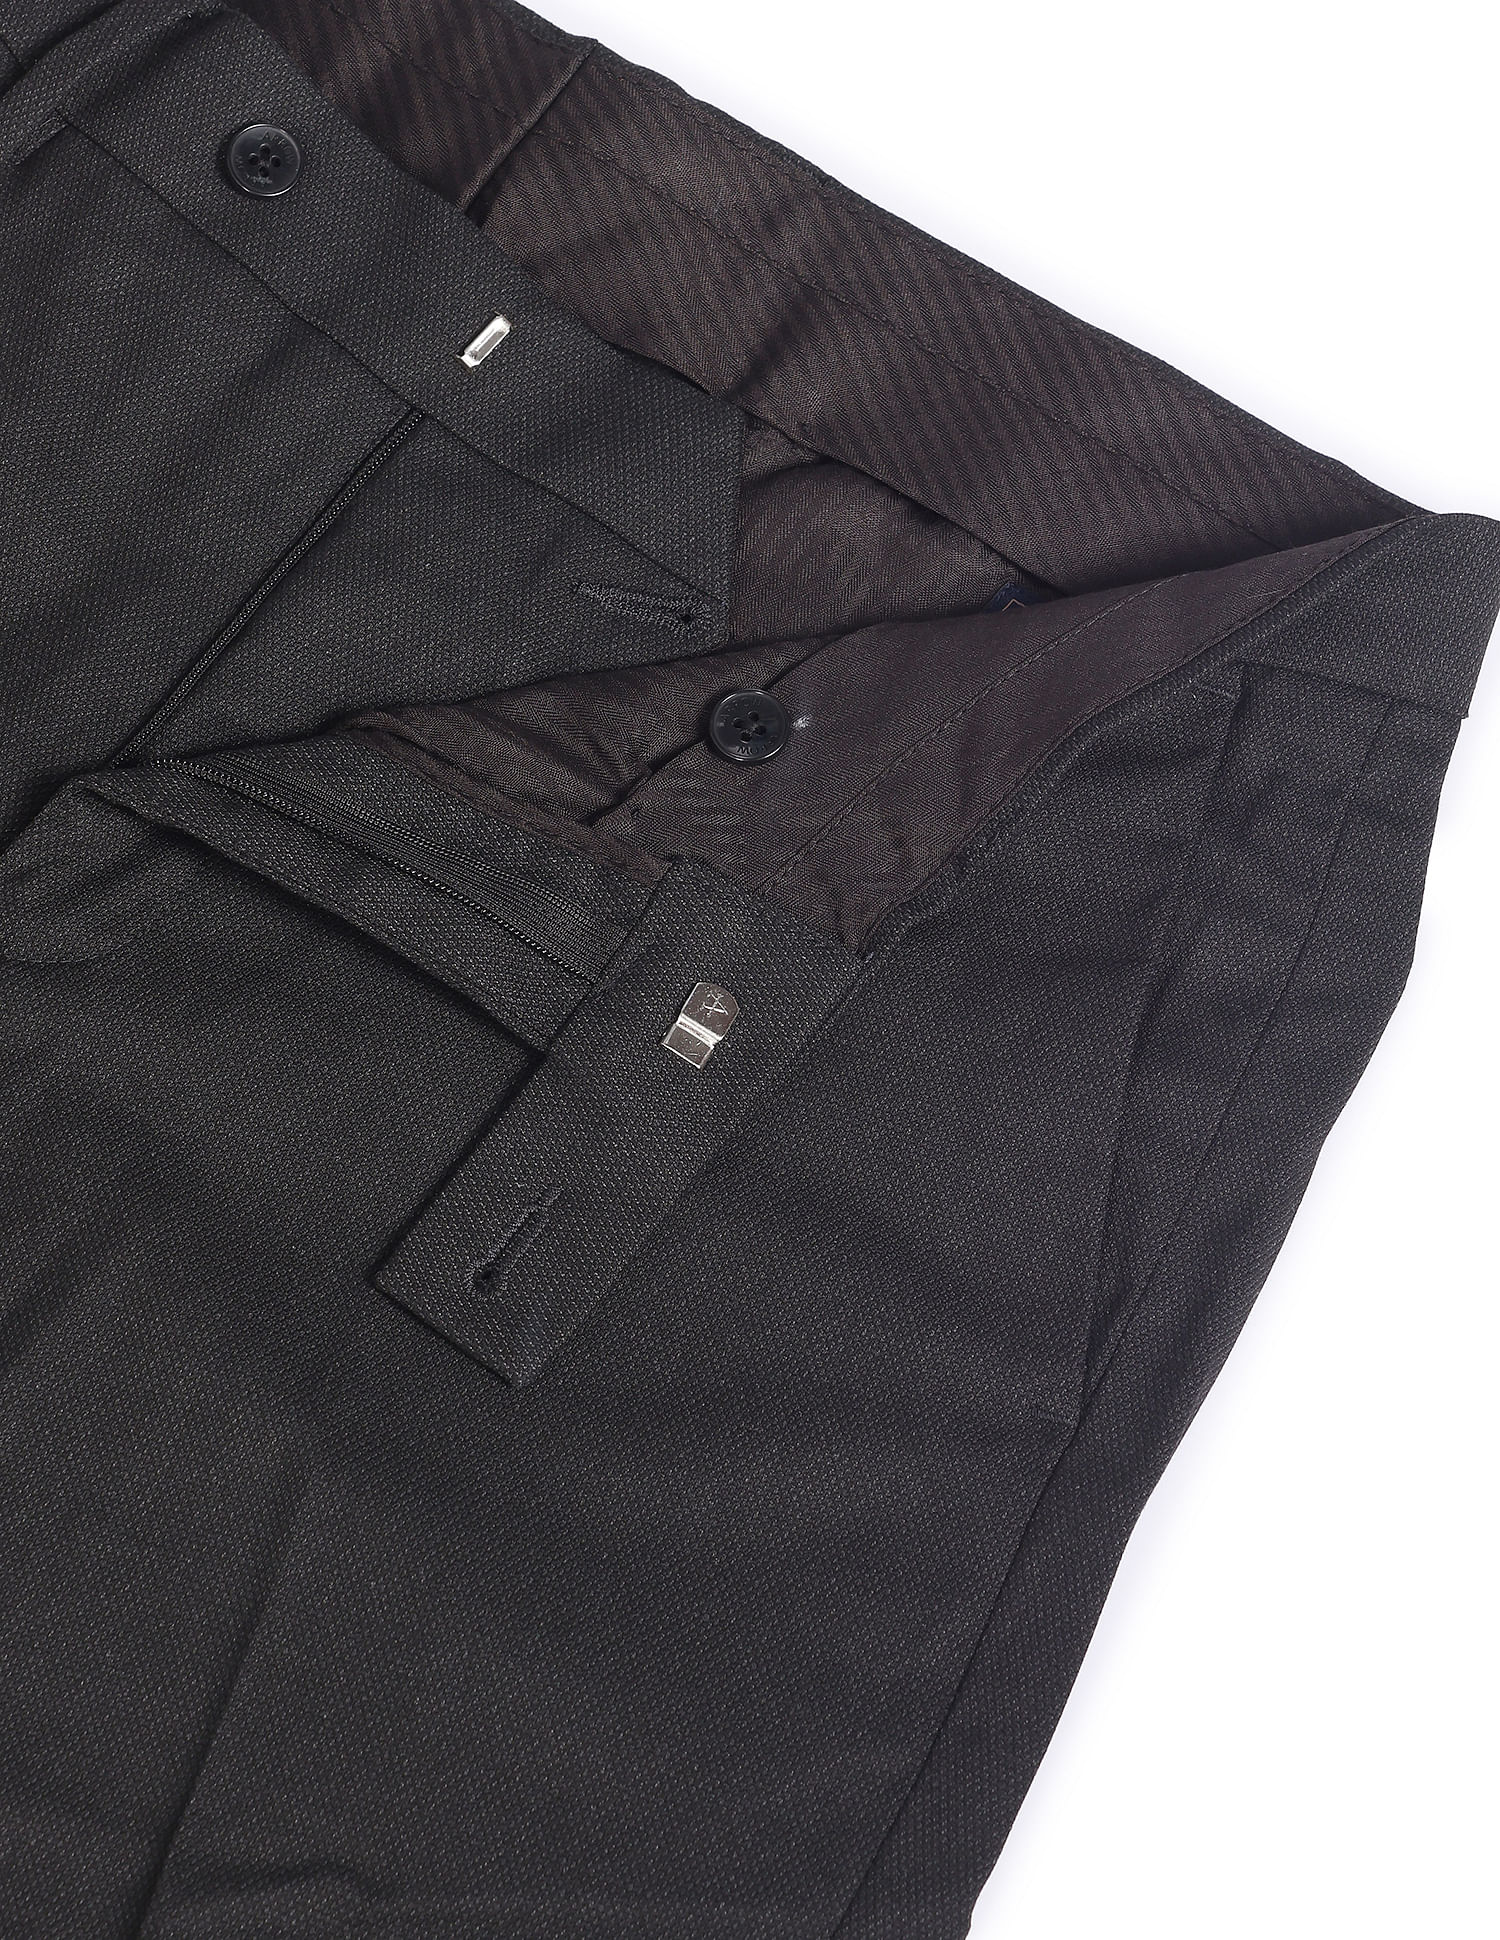 Calvin Klein Black Suit Separate Pants for Men Online India at Darveys.com